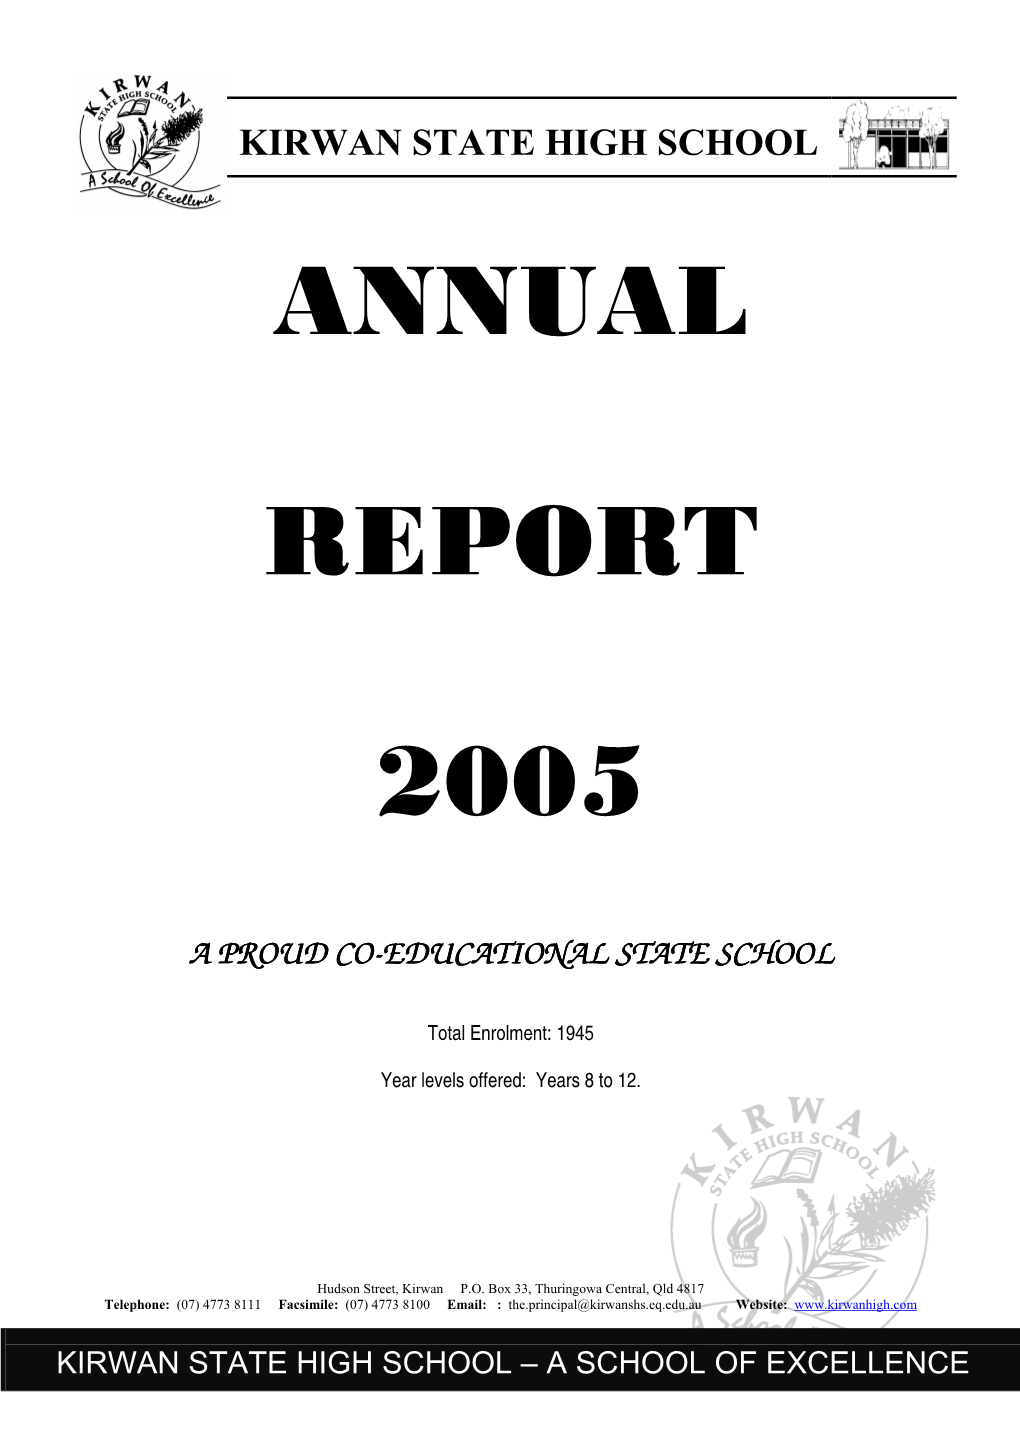 School Annual Report 2005